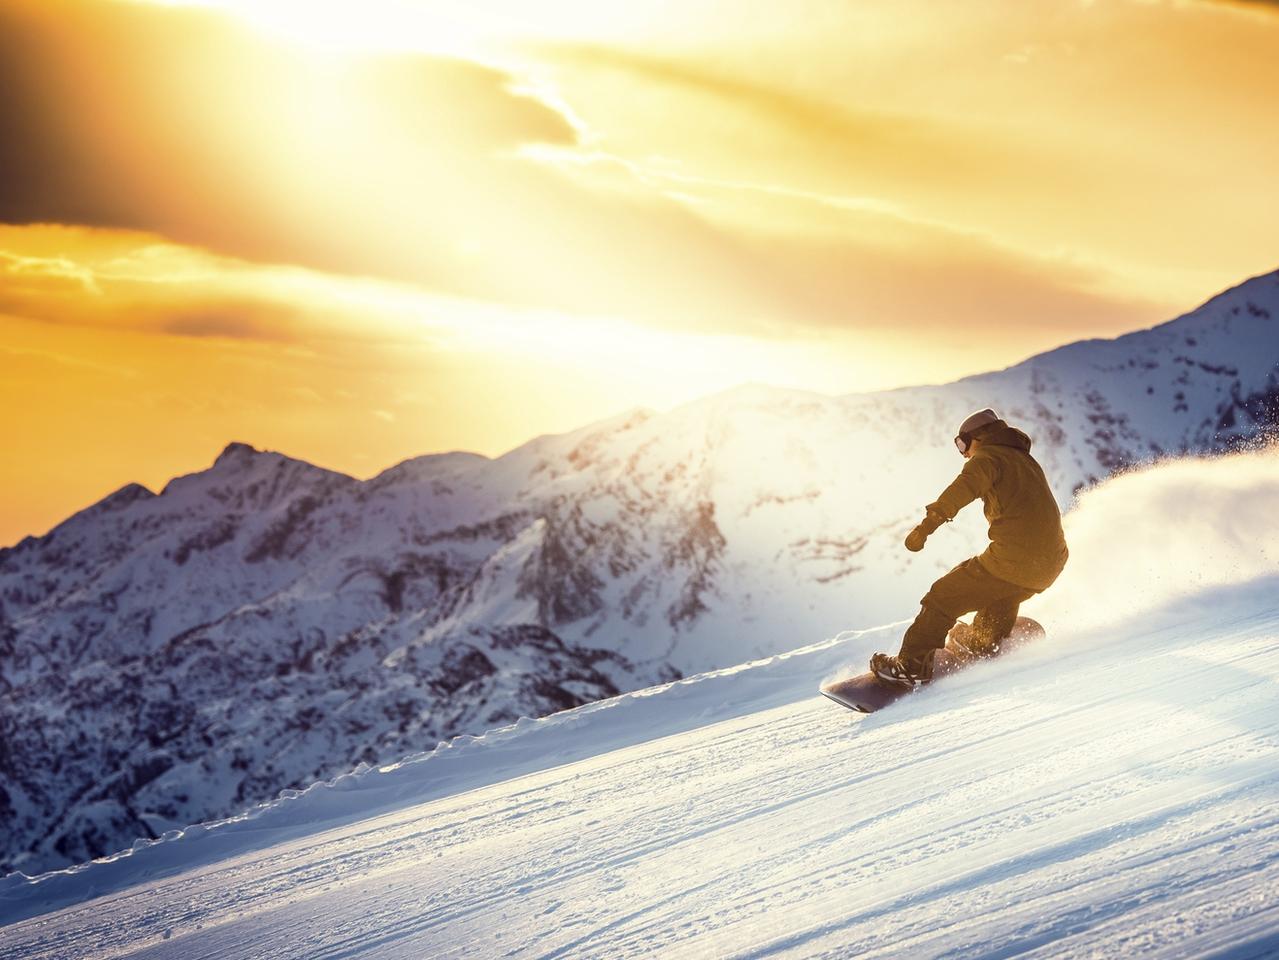 Man snowboarding at dusk